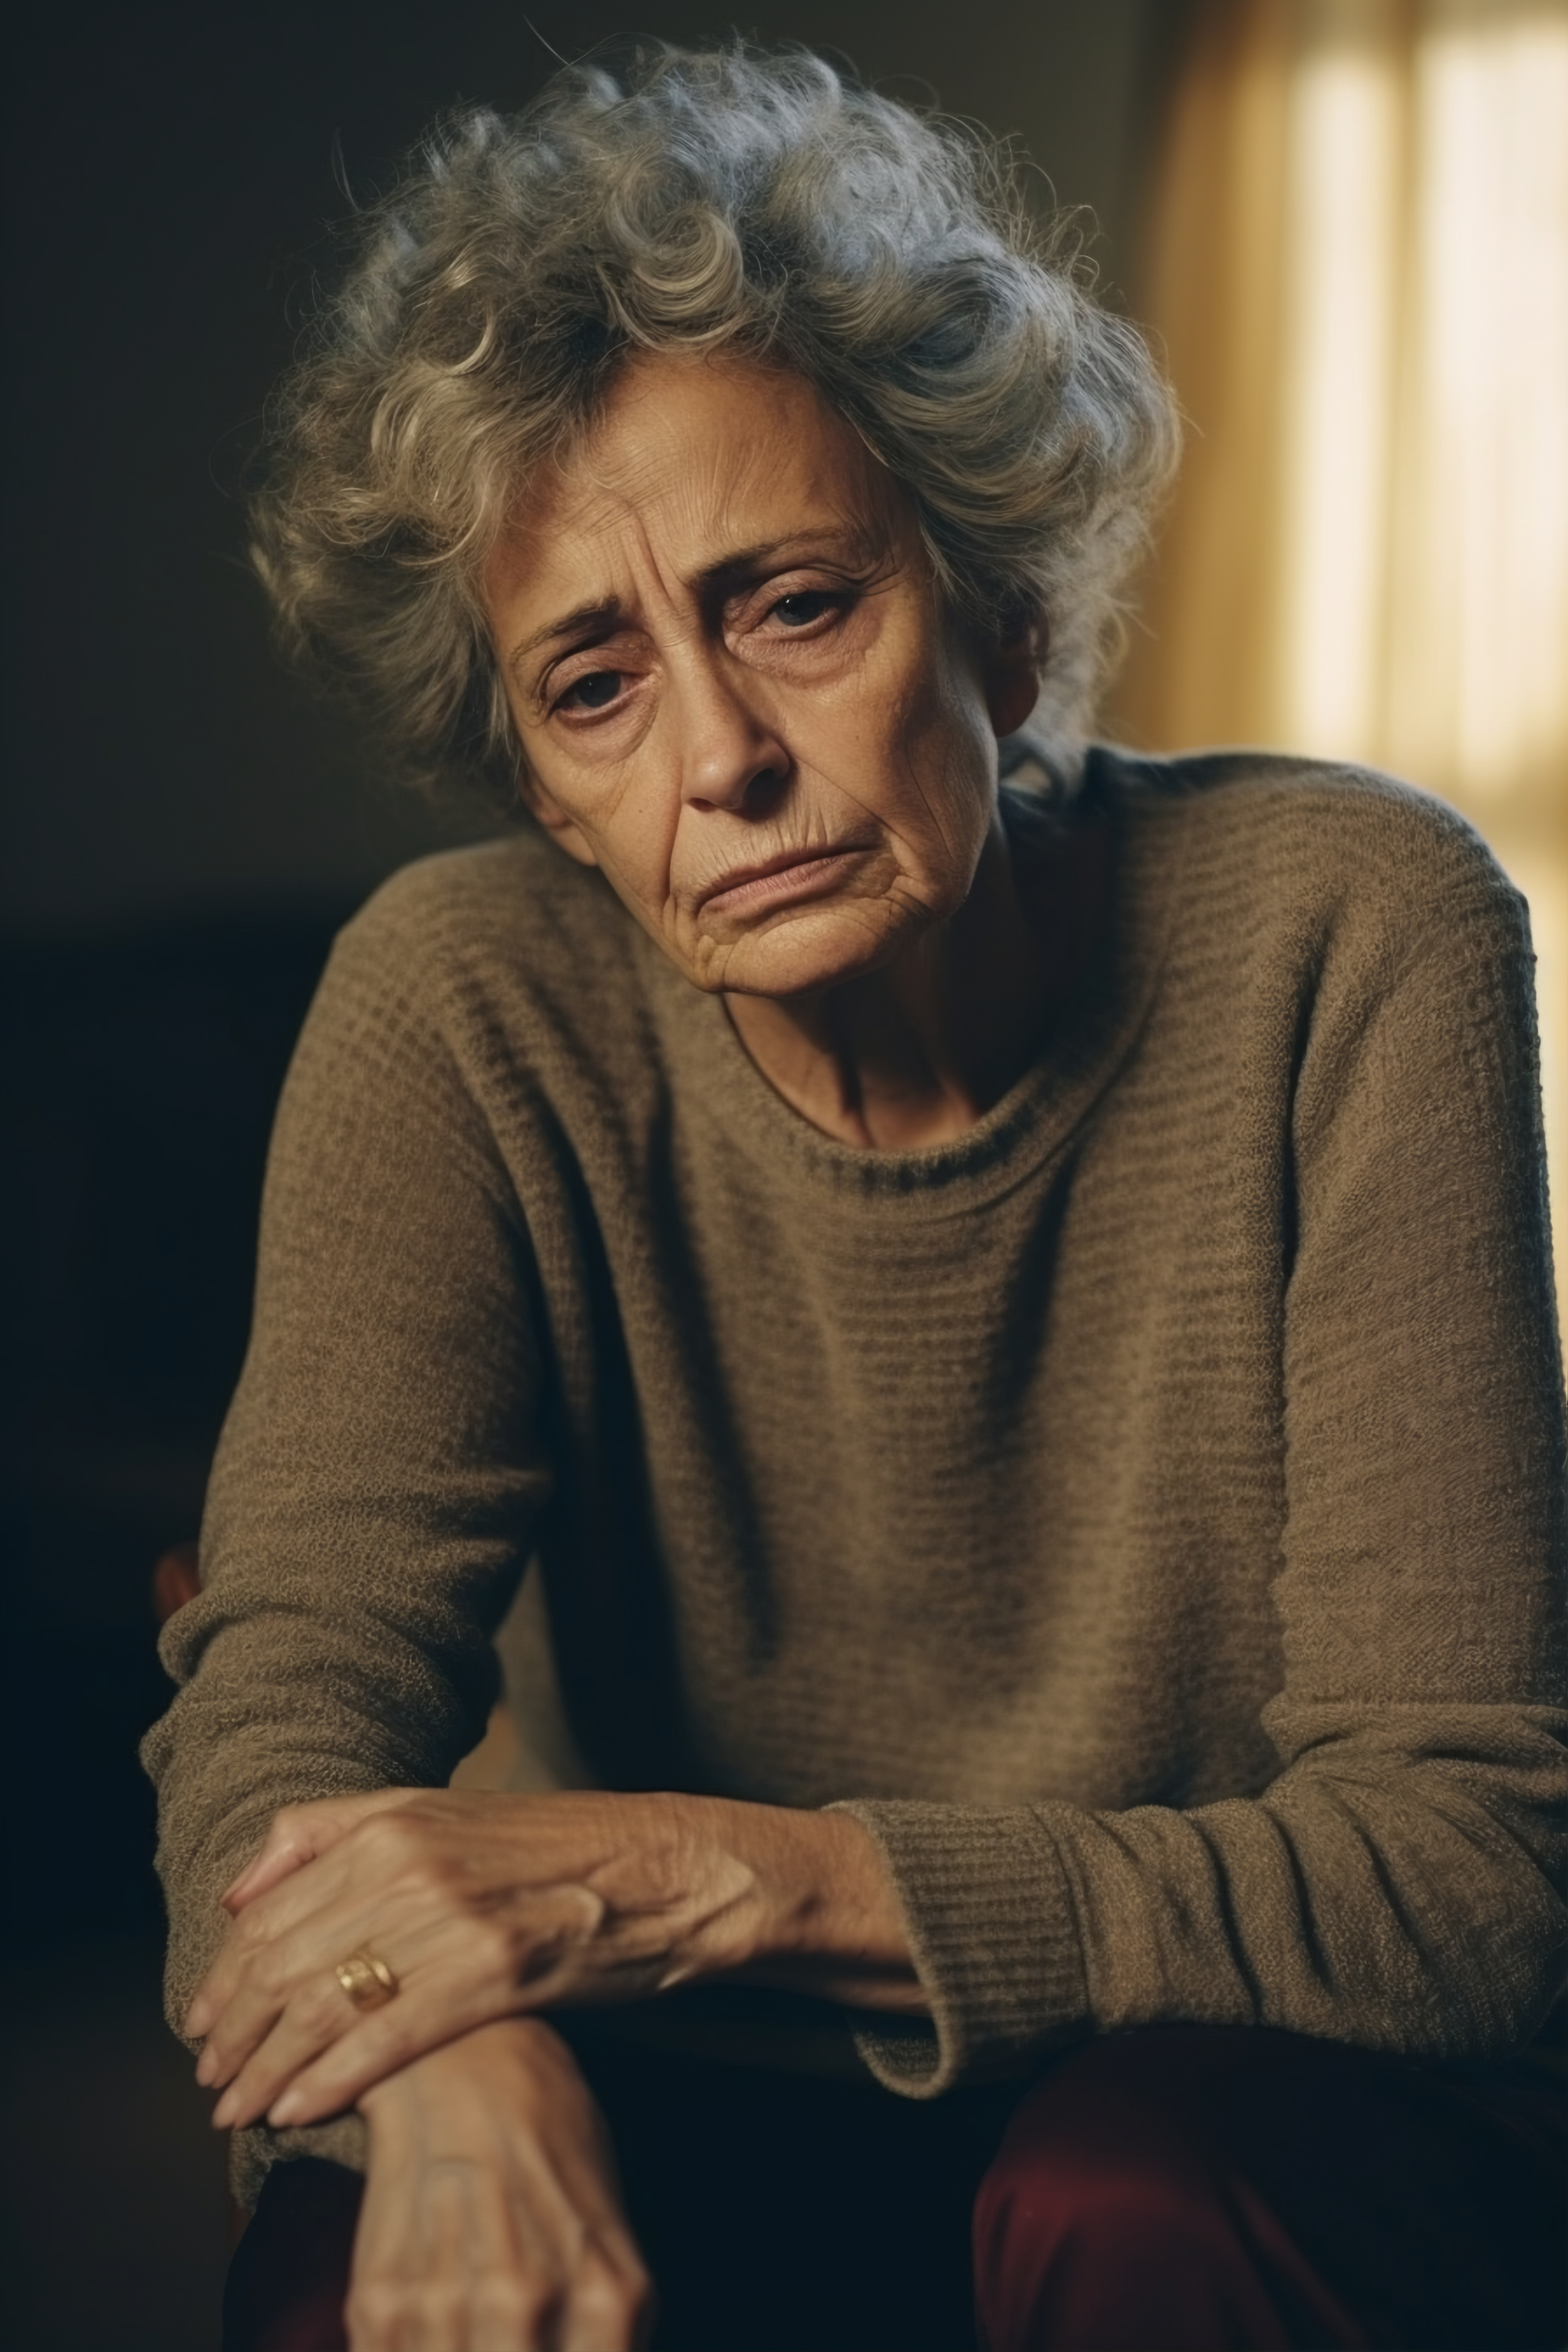 A sad elderly woman | Source: Freepik